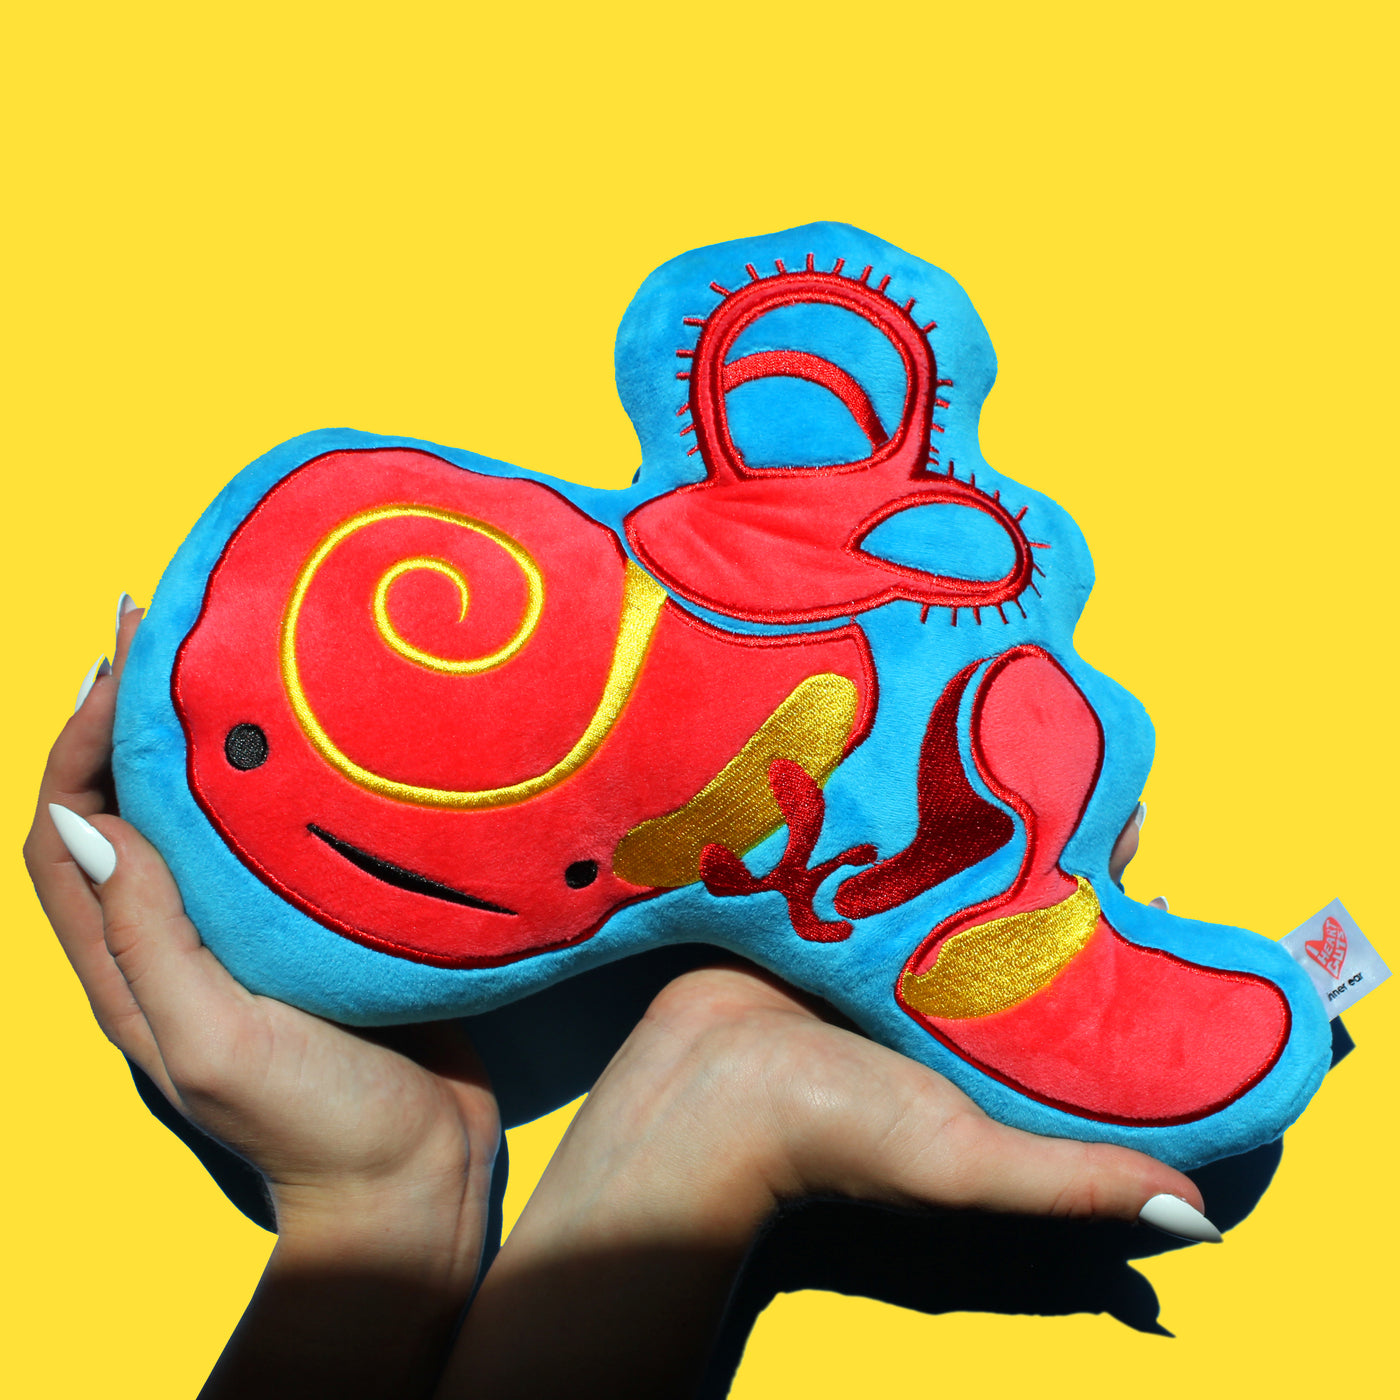 Inner Ear Plush - Now Hear This - Plush Organ Stuffed Toy Pillow - I Heart Guts